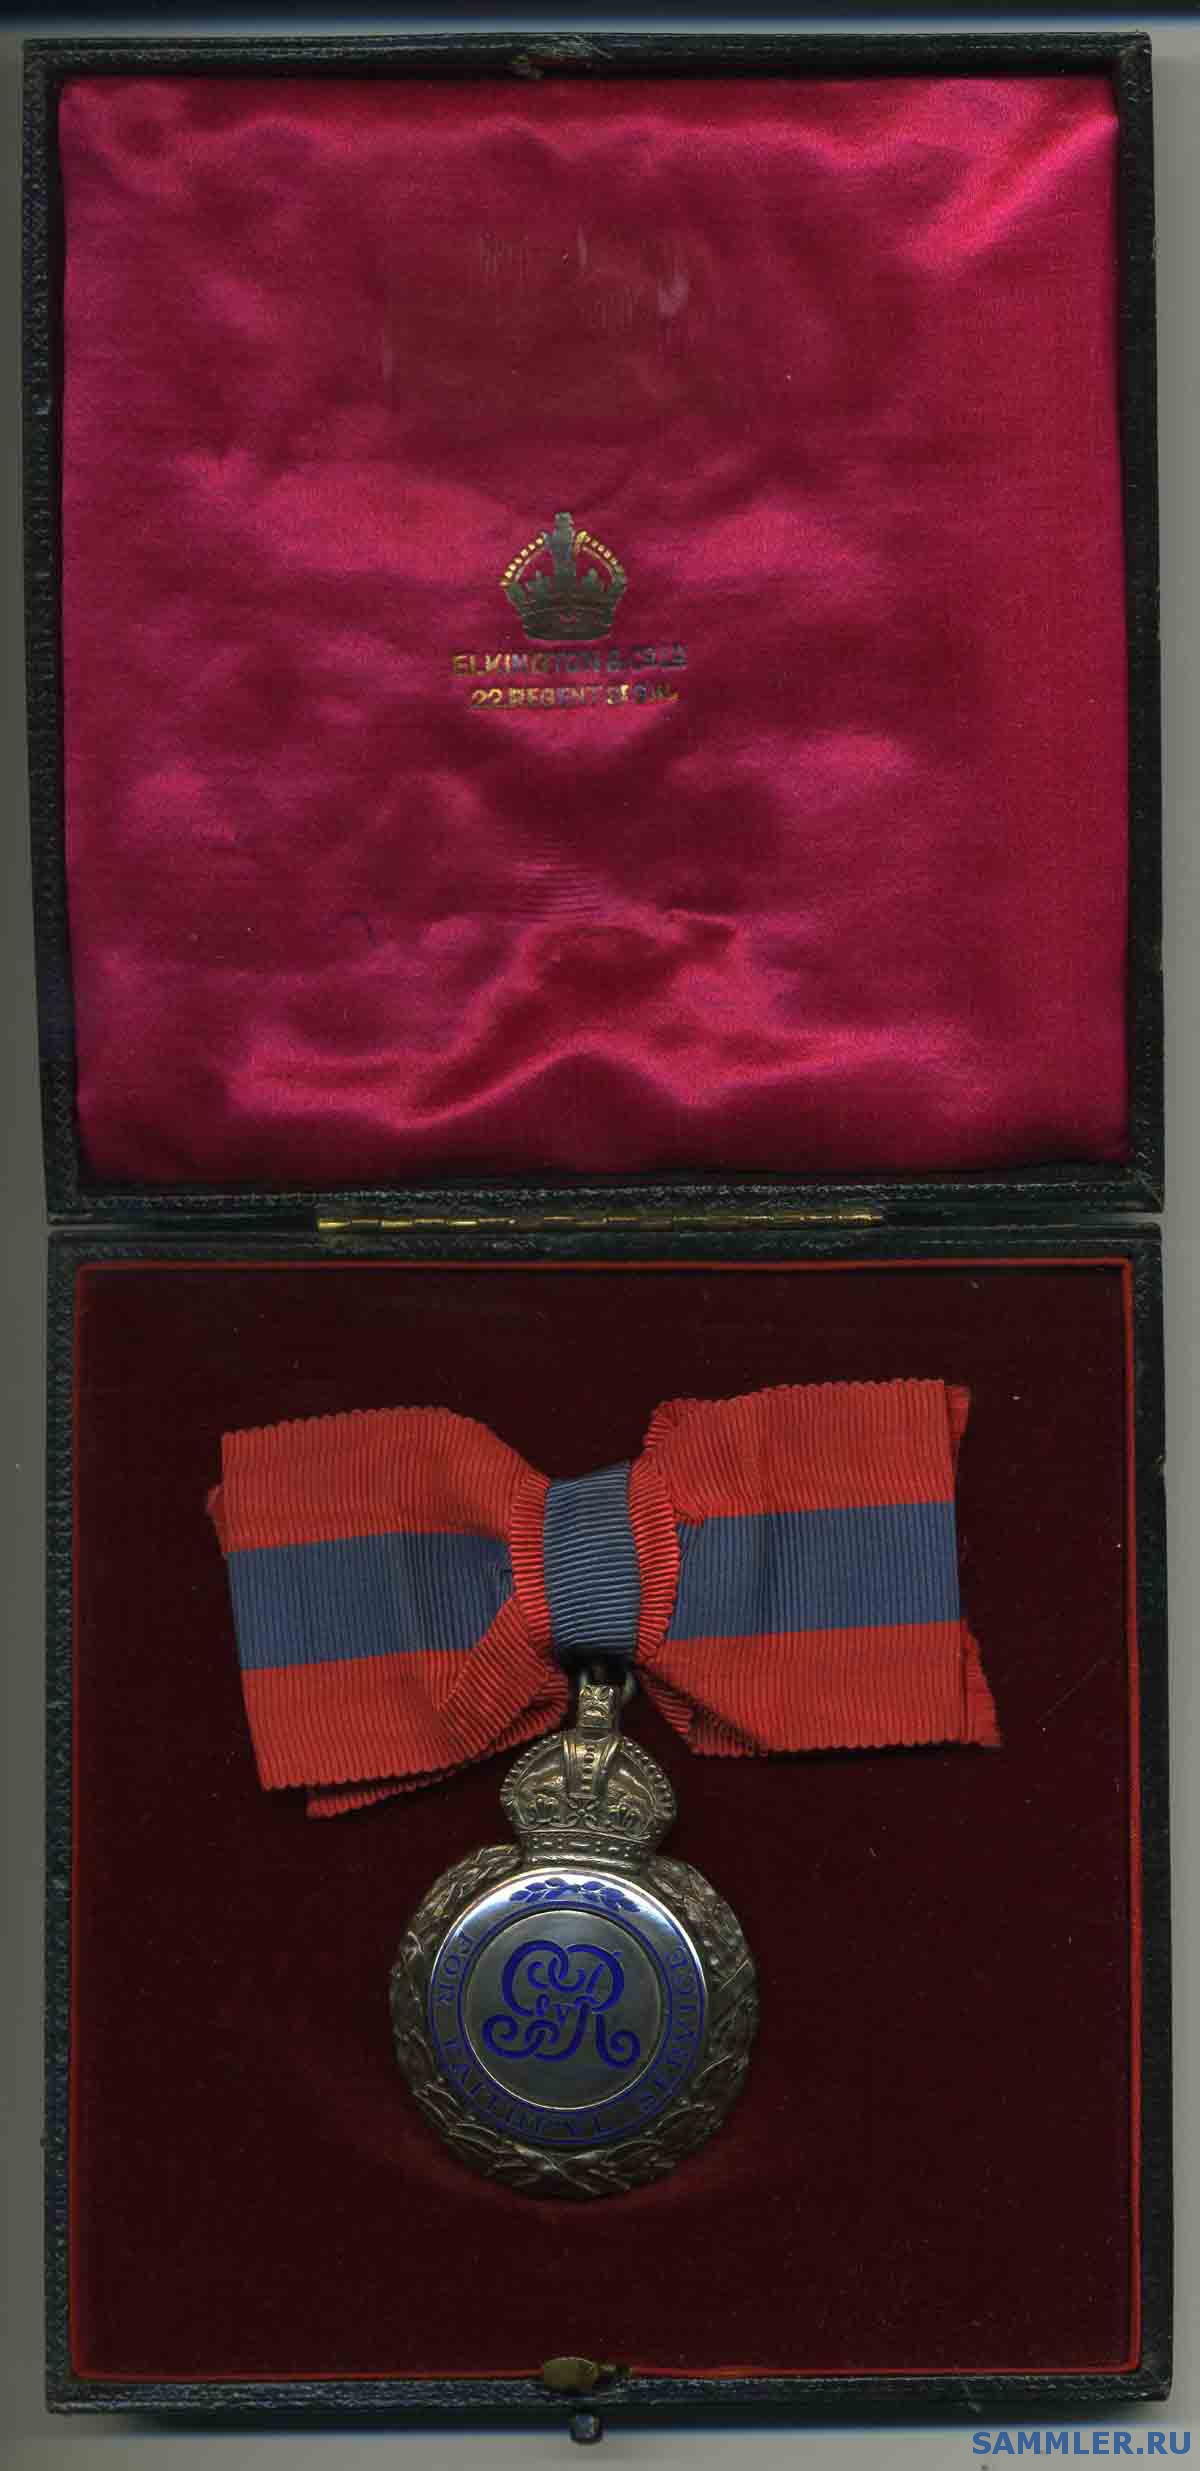 Imperial_Service_Medal_d.jpg